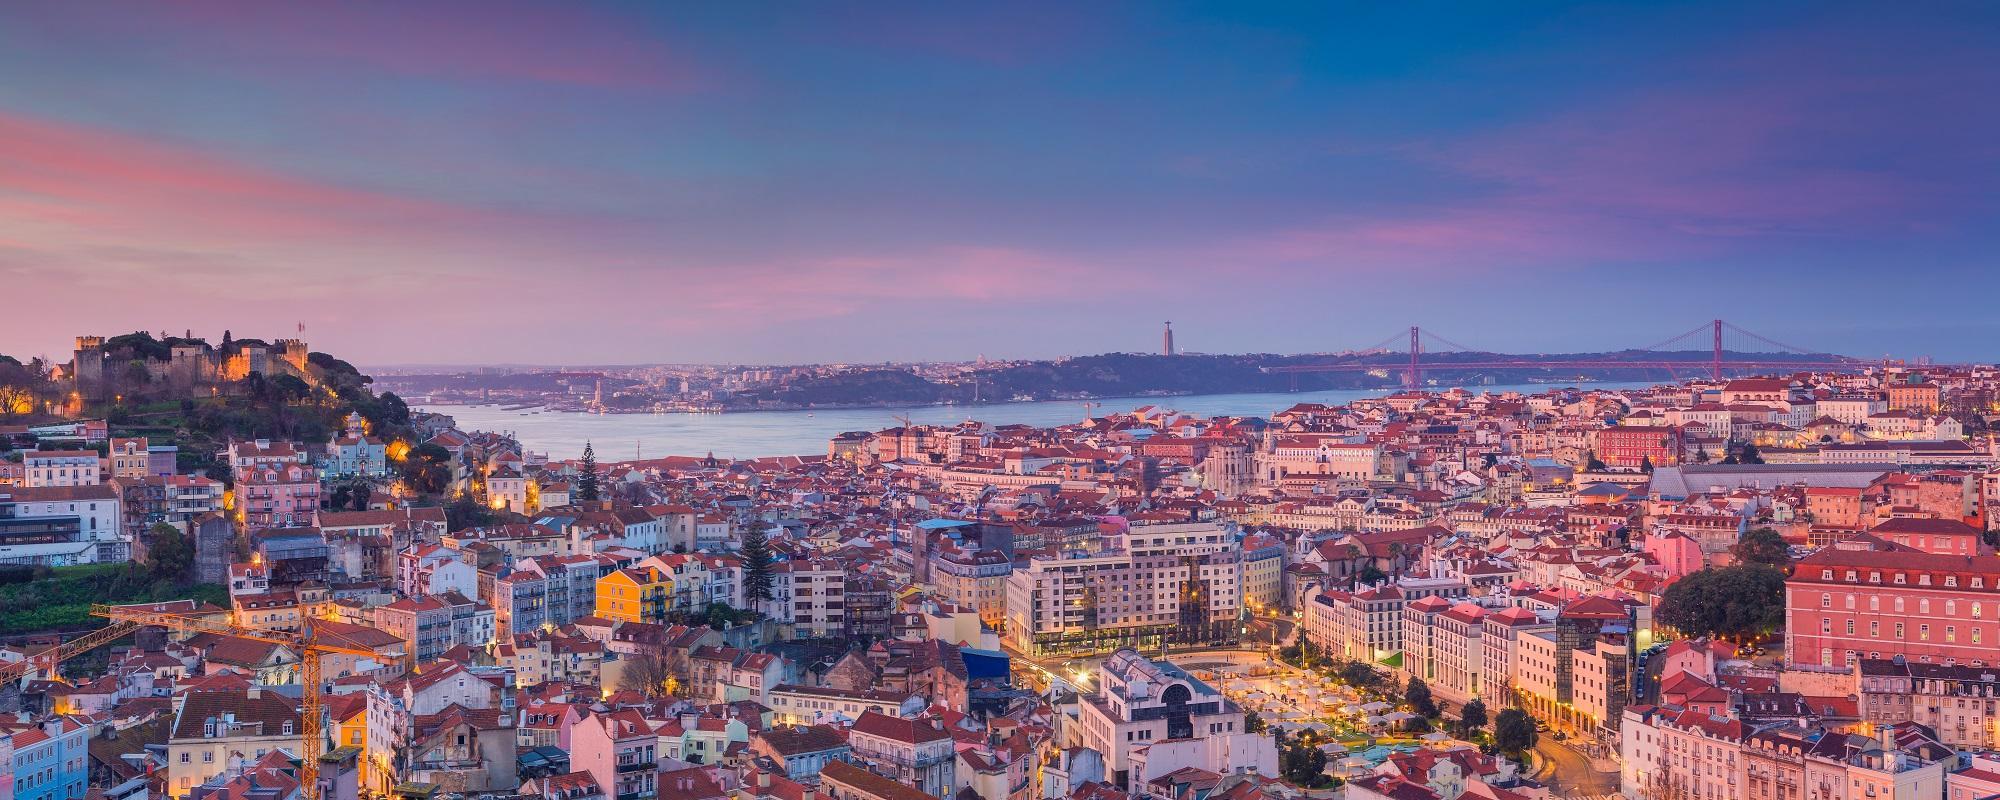 Viaggi organizzati a Lisbona Caldana Europe Travel